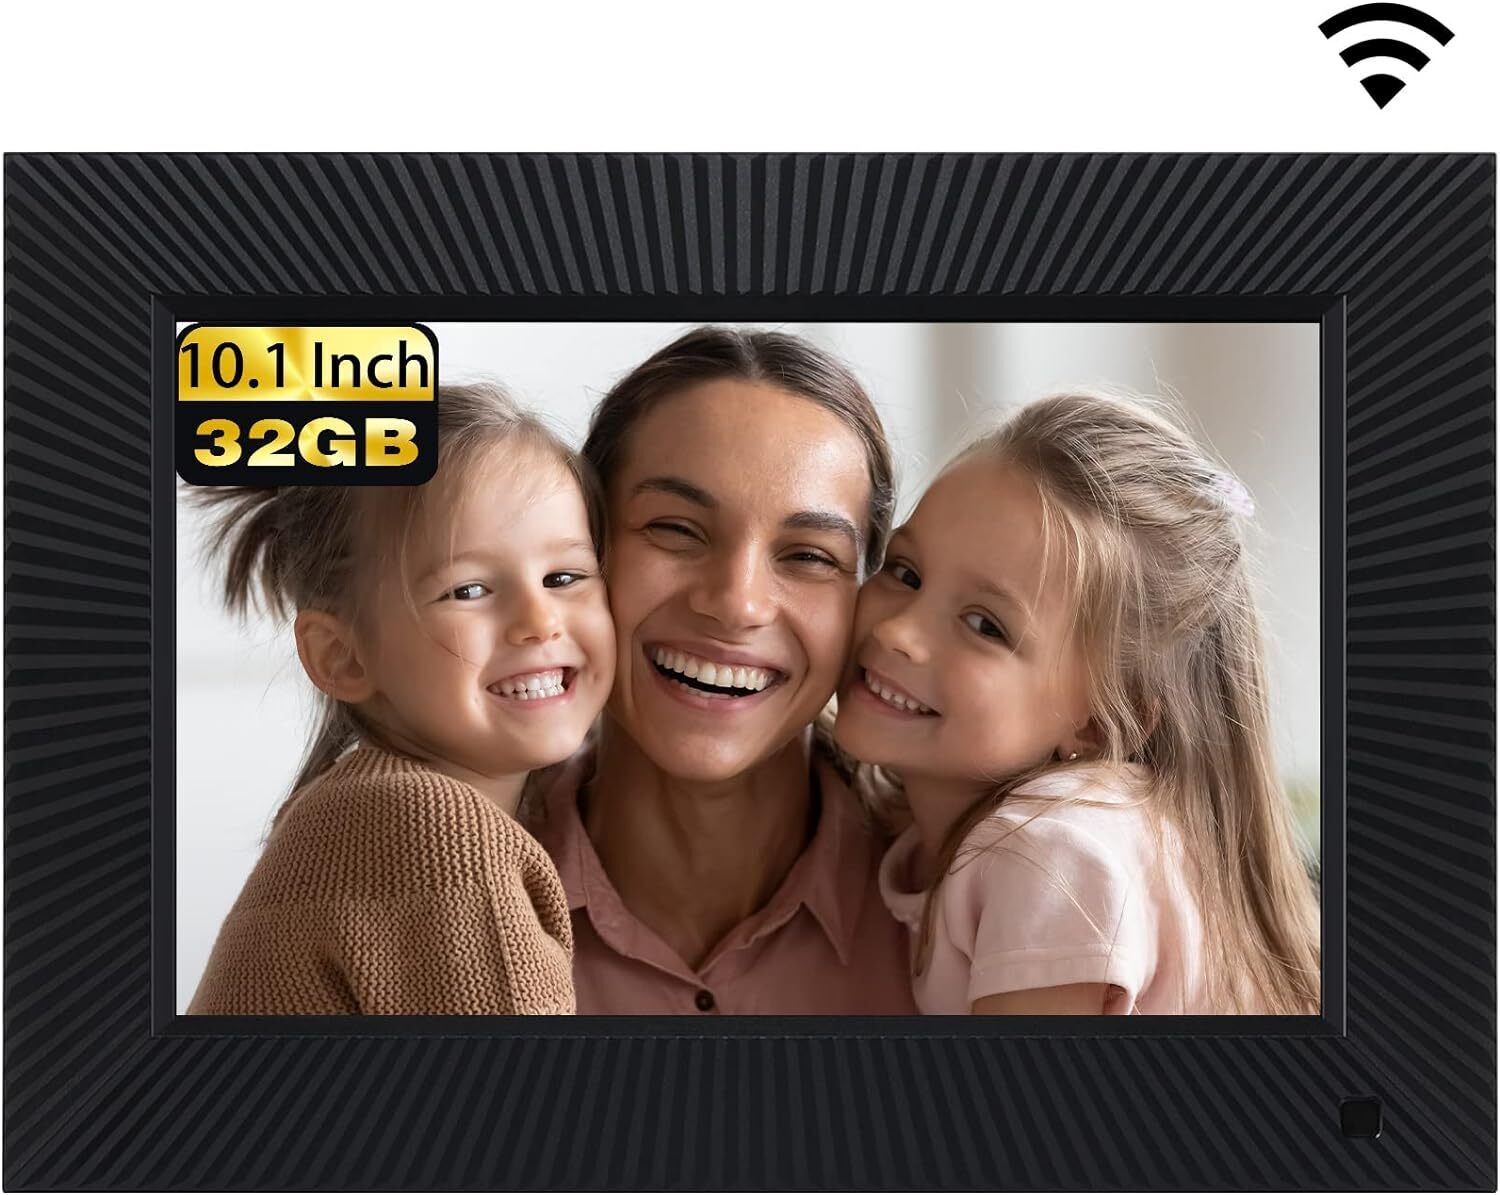 NexFoto 32GB Digital Photo Frame 10.1 Inch, WiFi 10.1” HD 32GB, Elite Black 